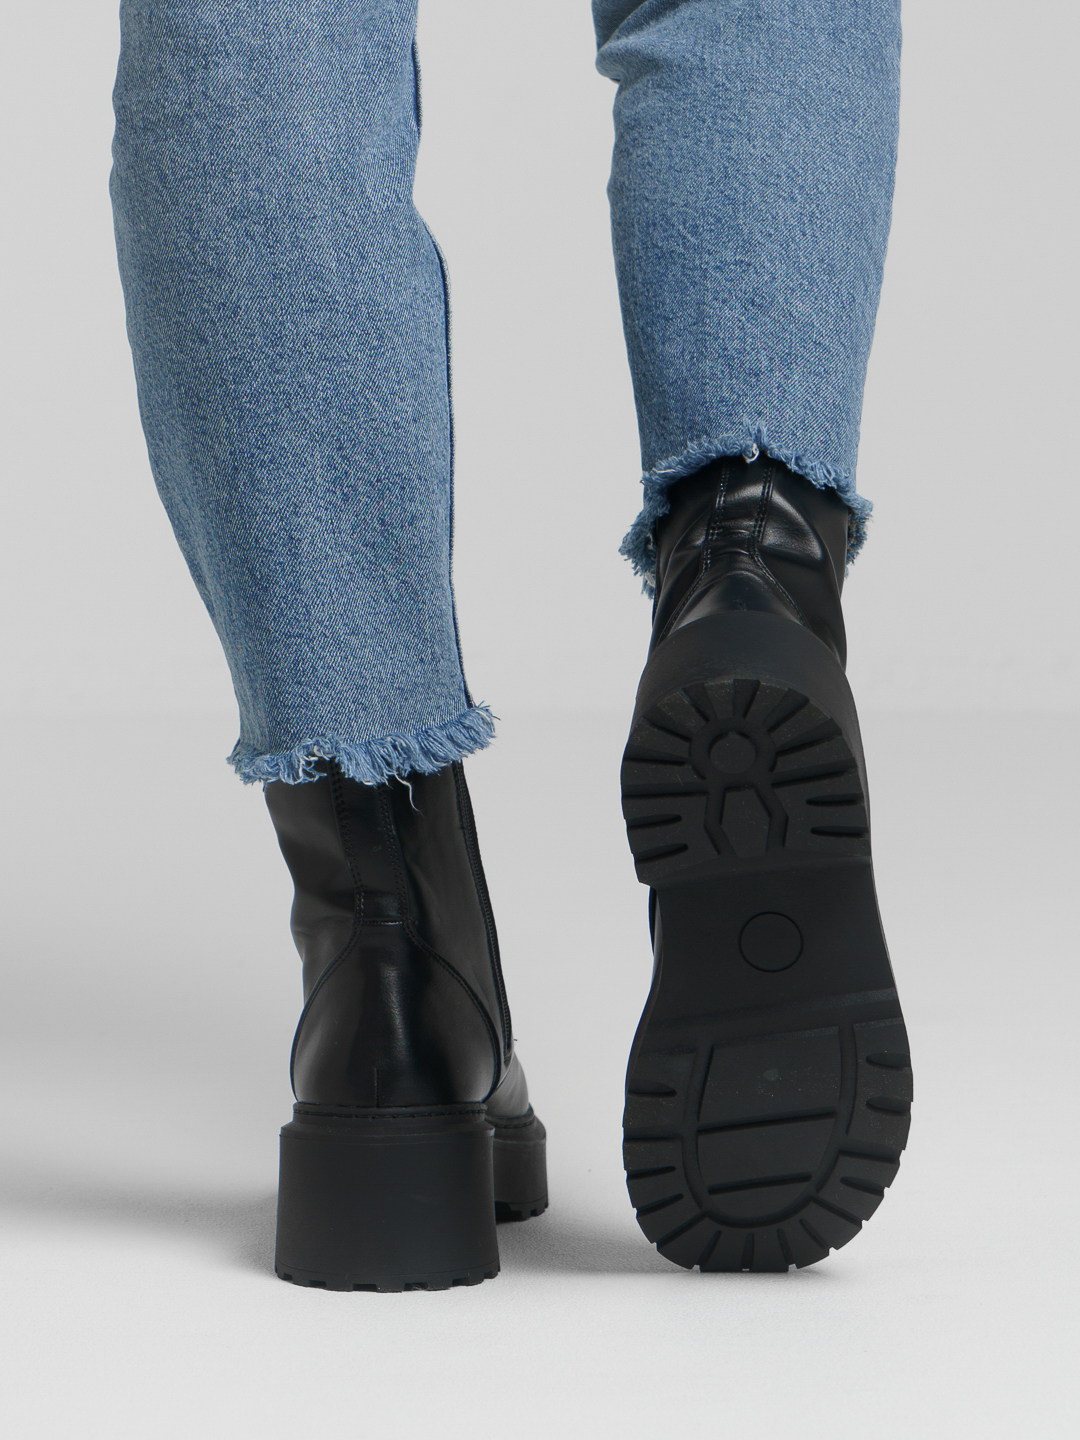 Ботинки Befree женские, на платформе со шнуровкой купить по цене 1450 ₽ винтернет-магазине KazanExpress